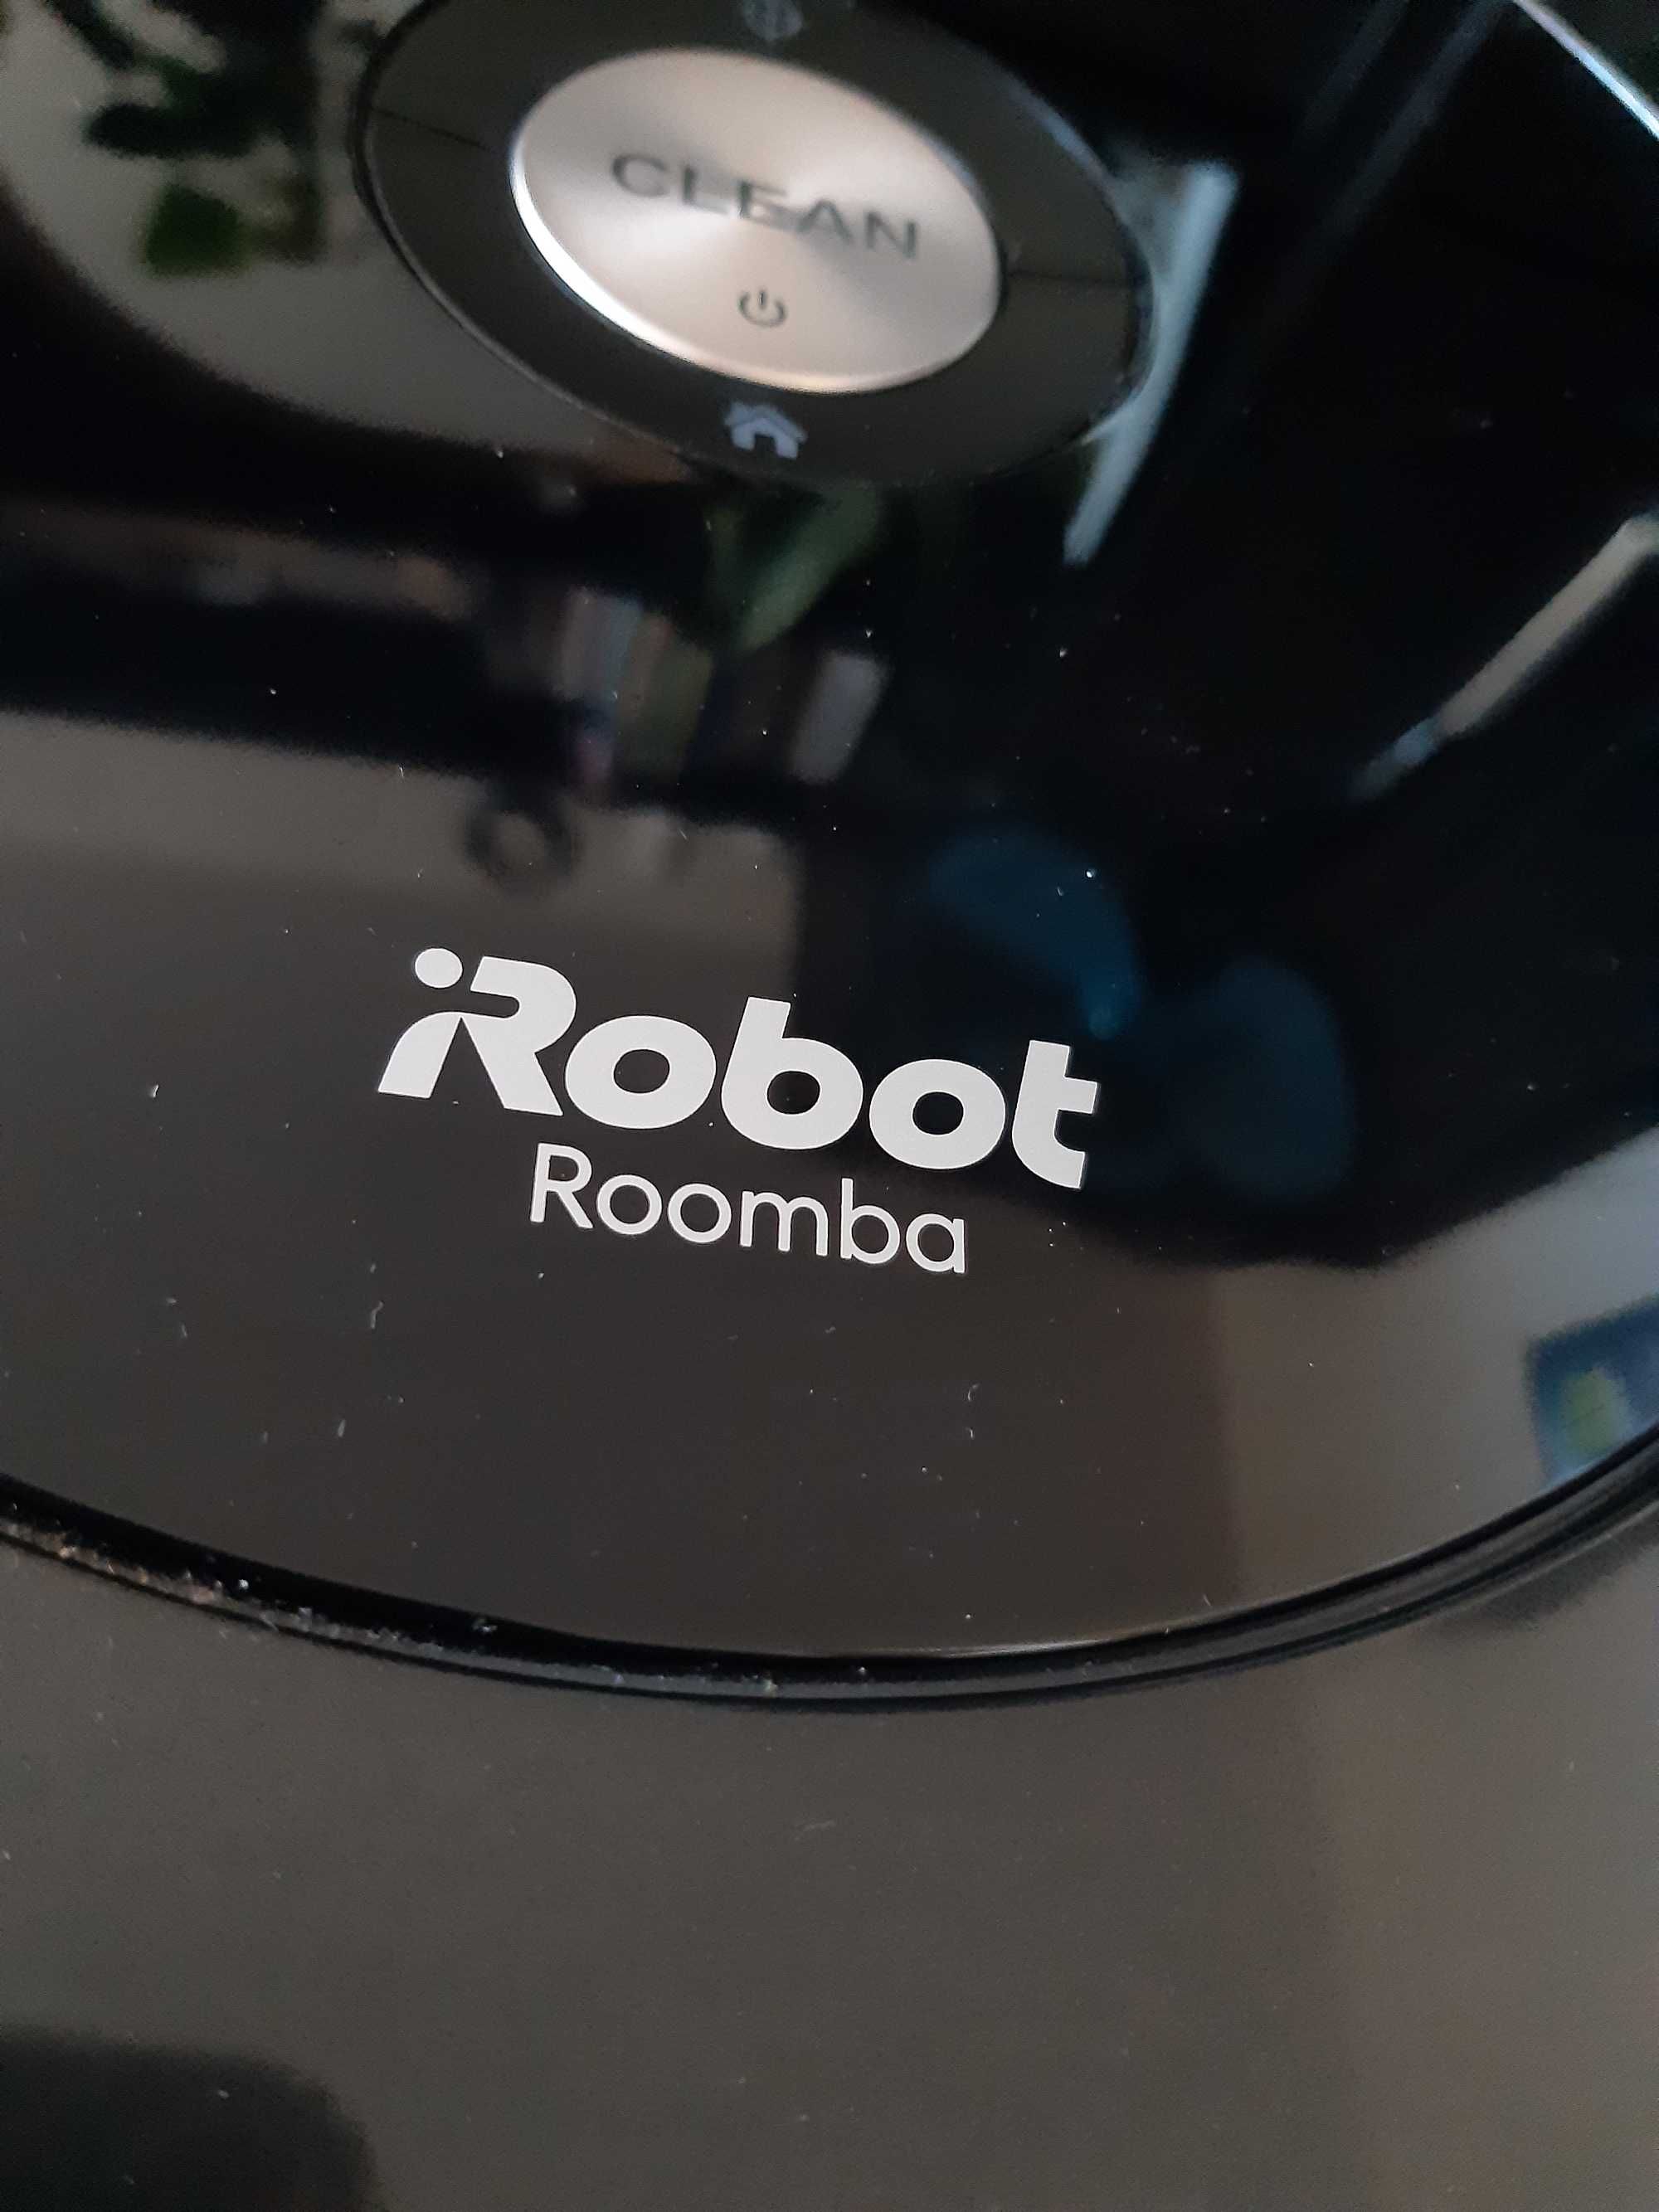 iRobot Roomba 696 odkurzacz